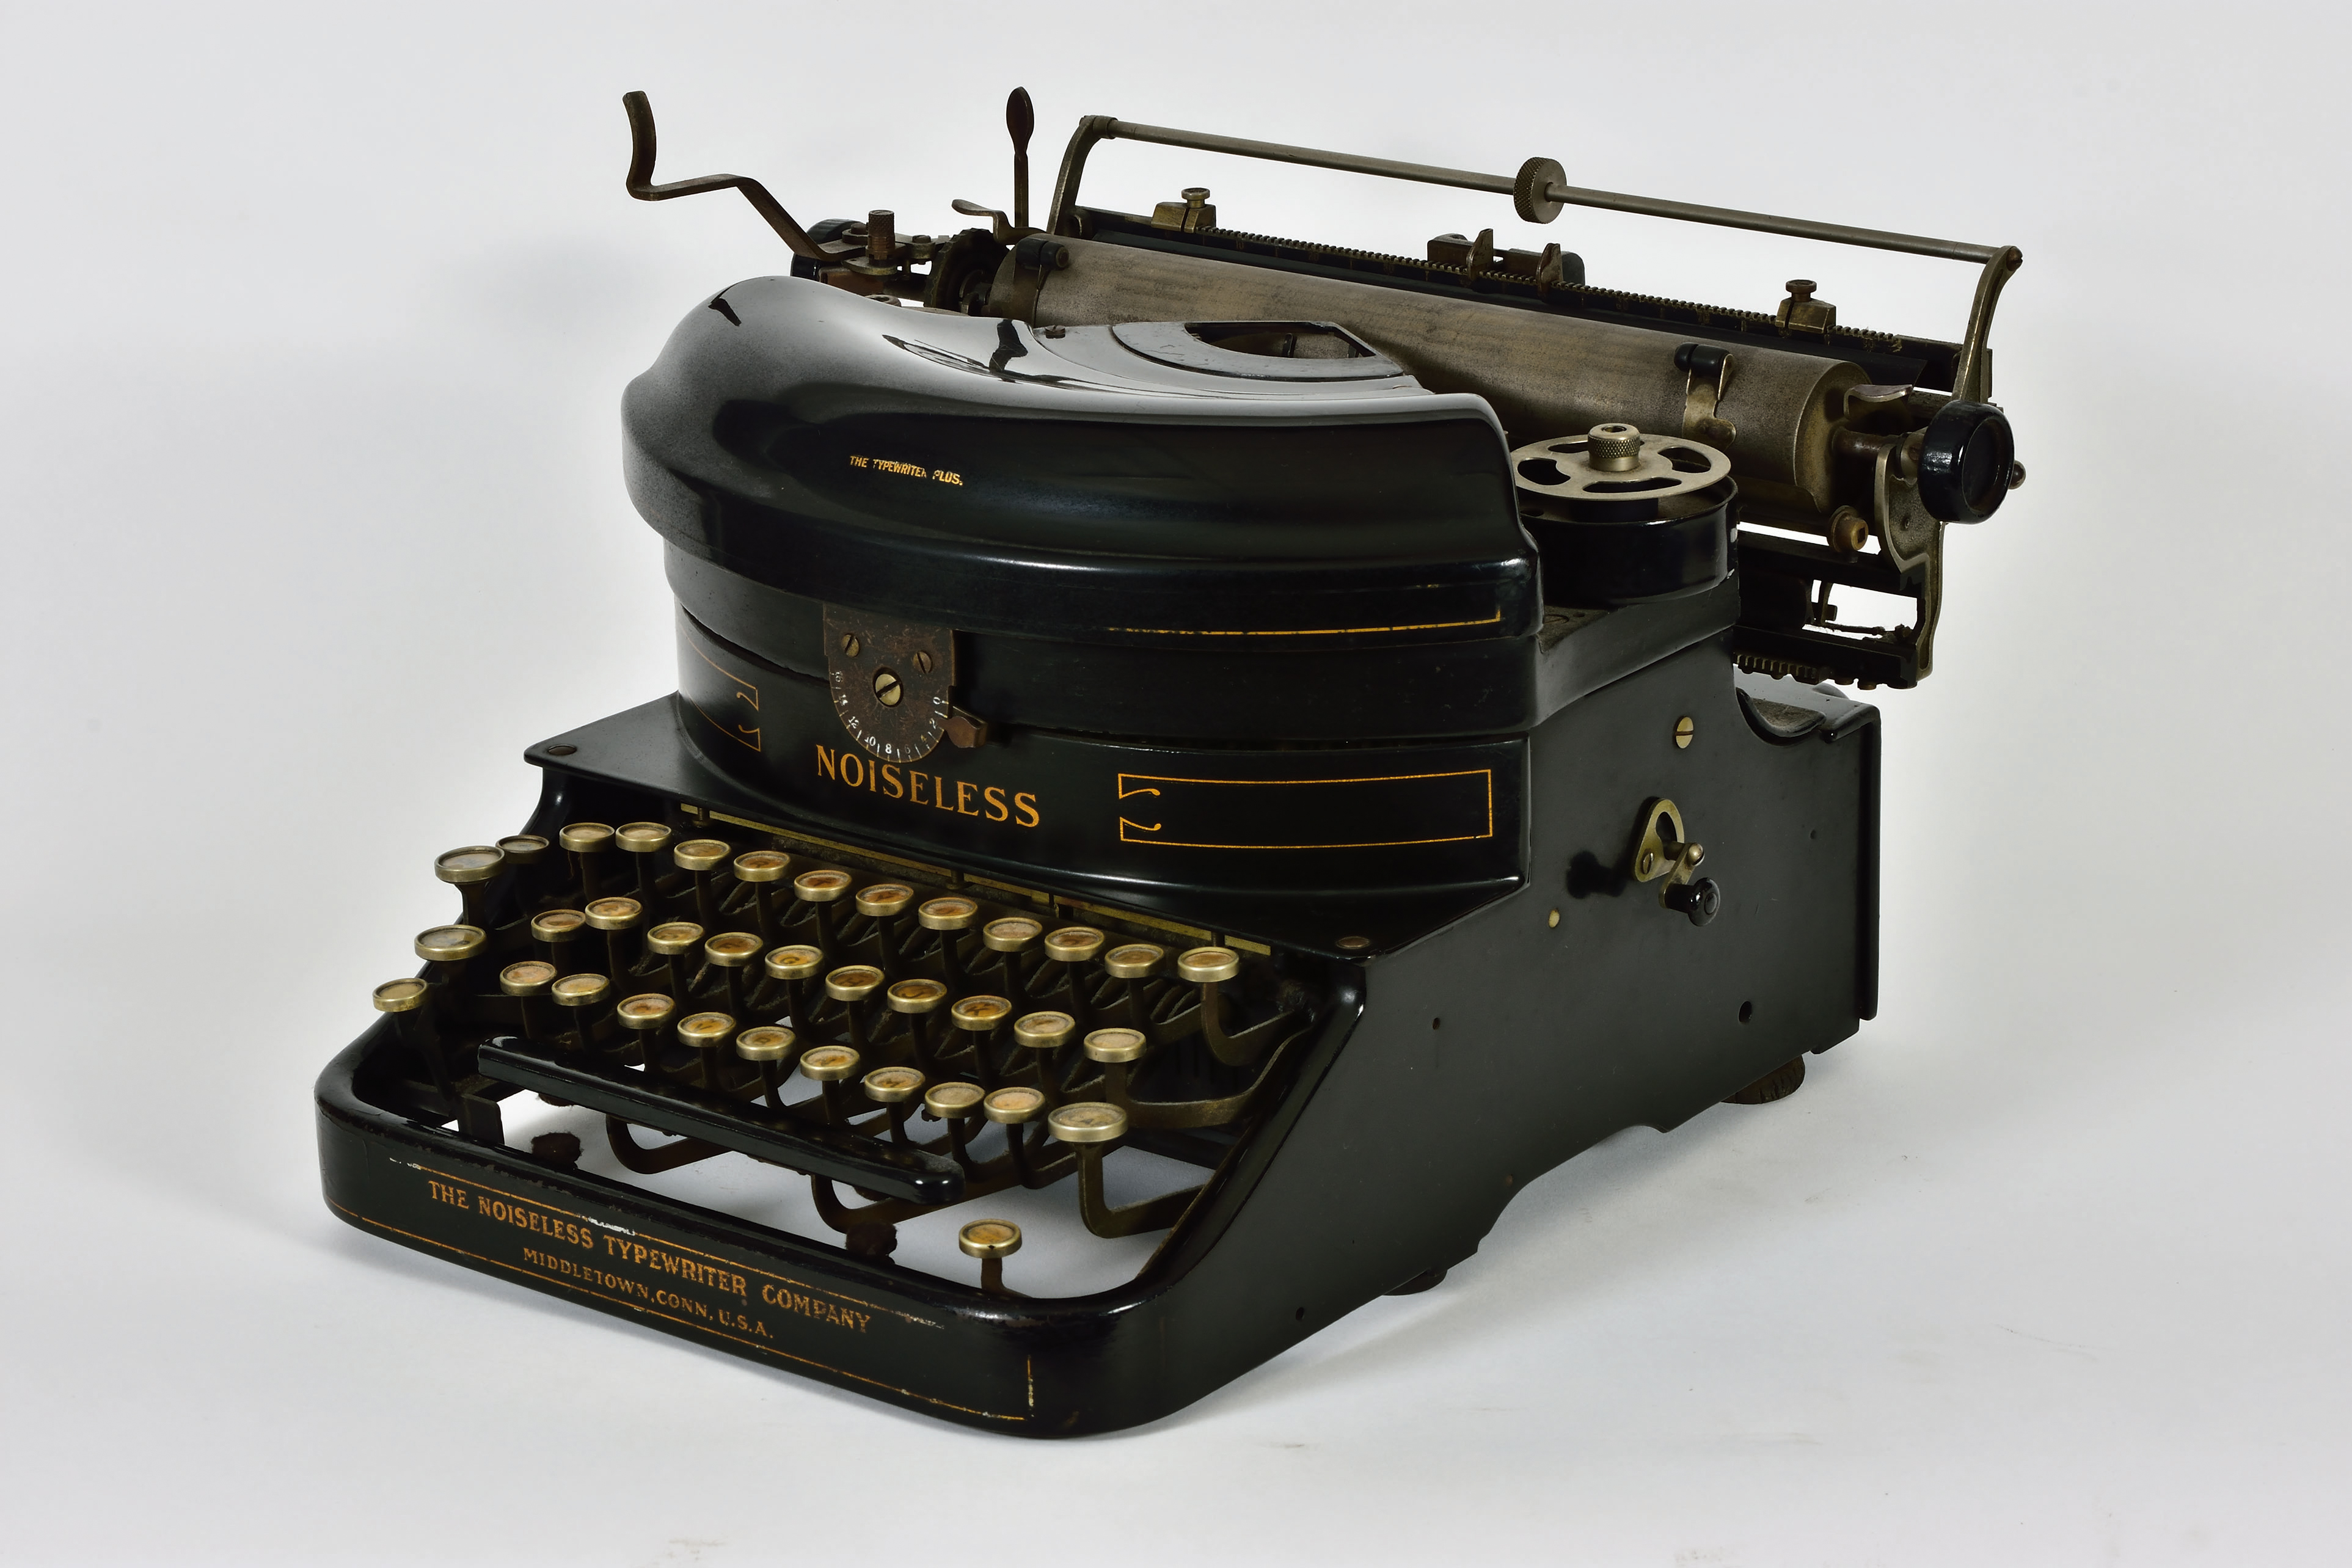 The Noiseless typewriter